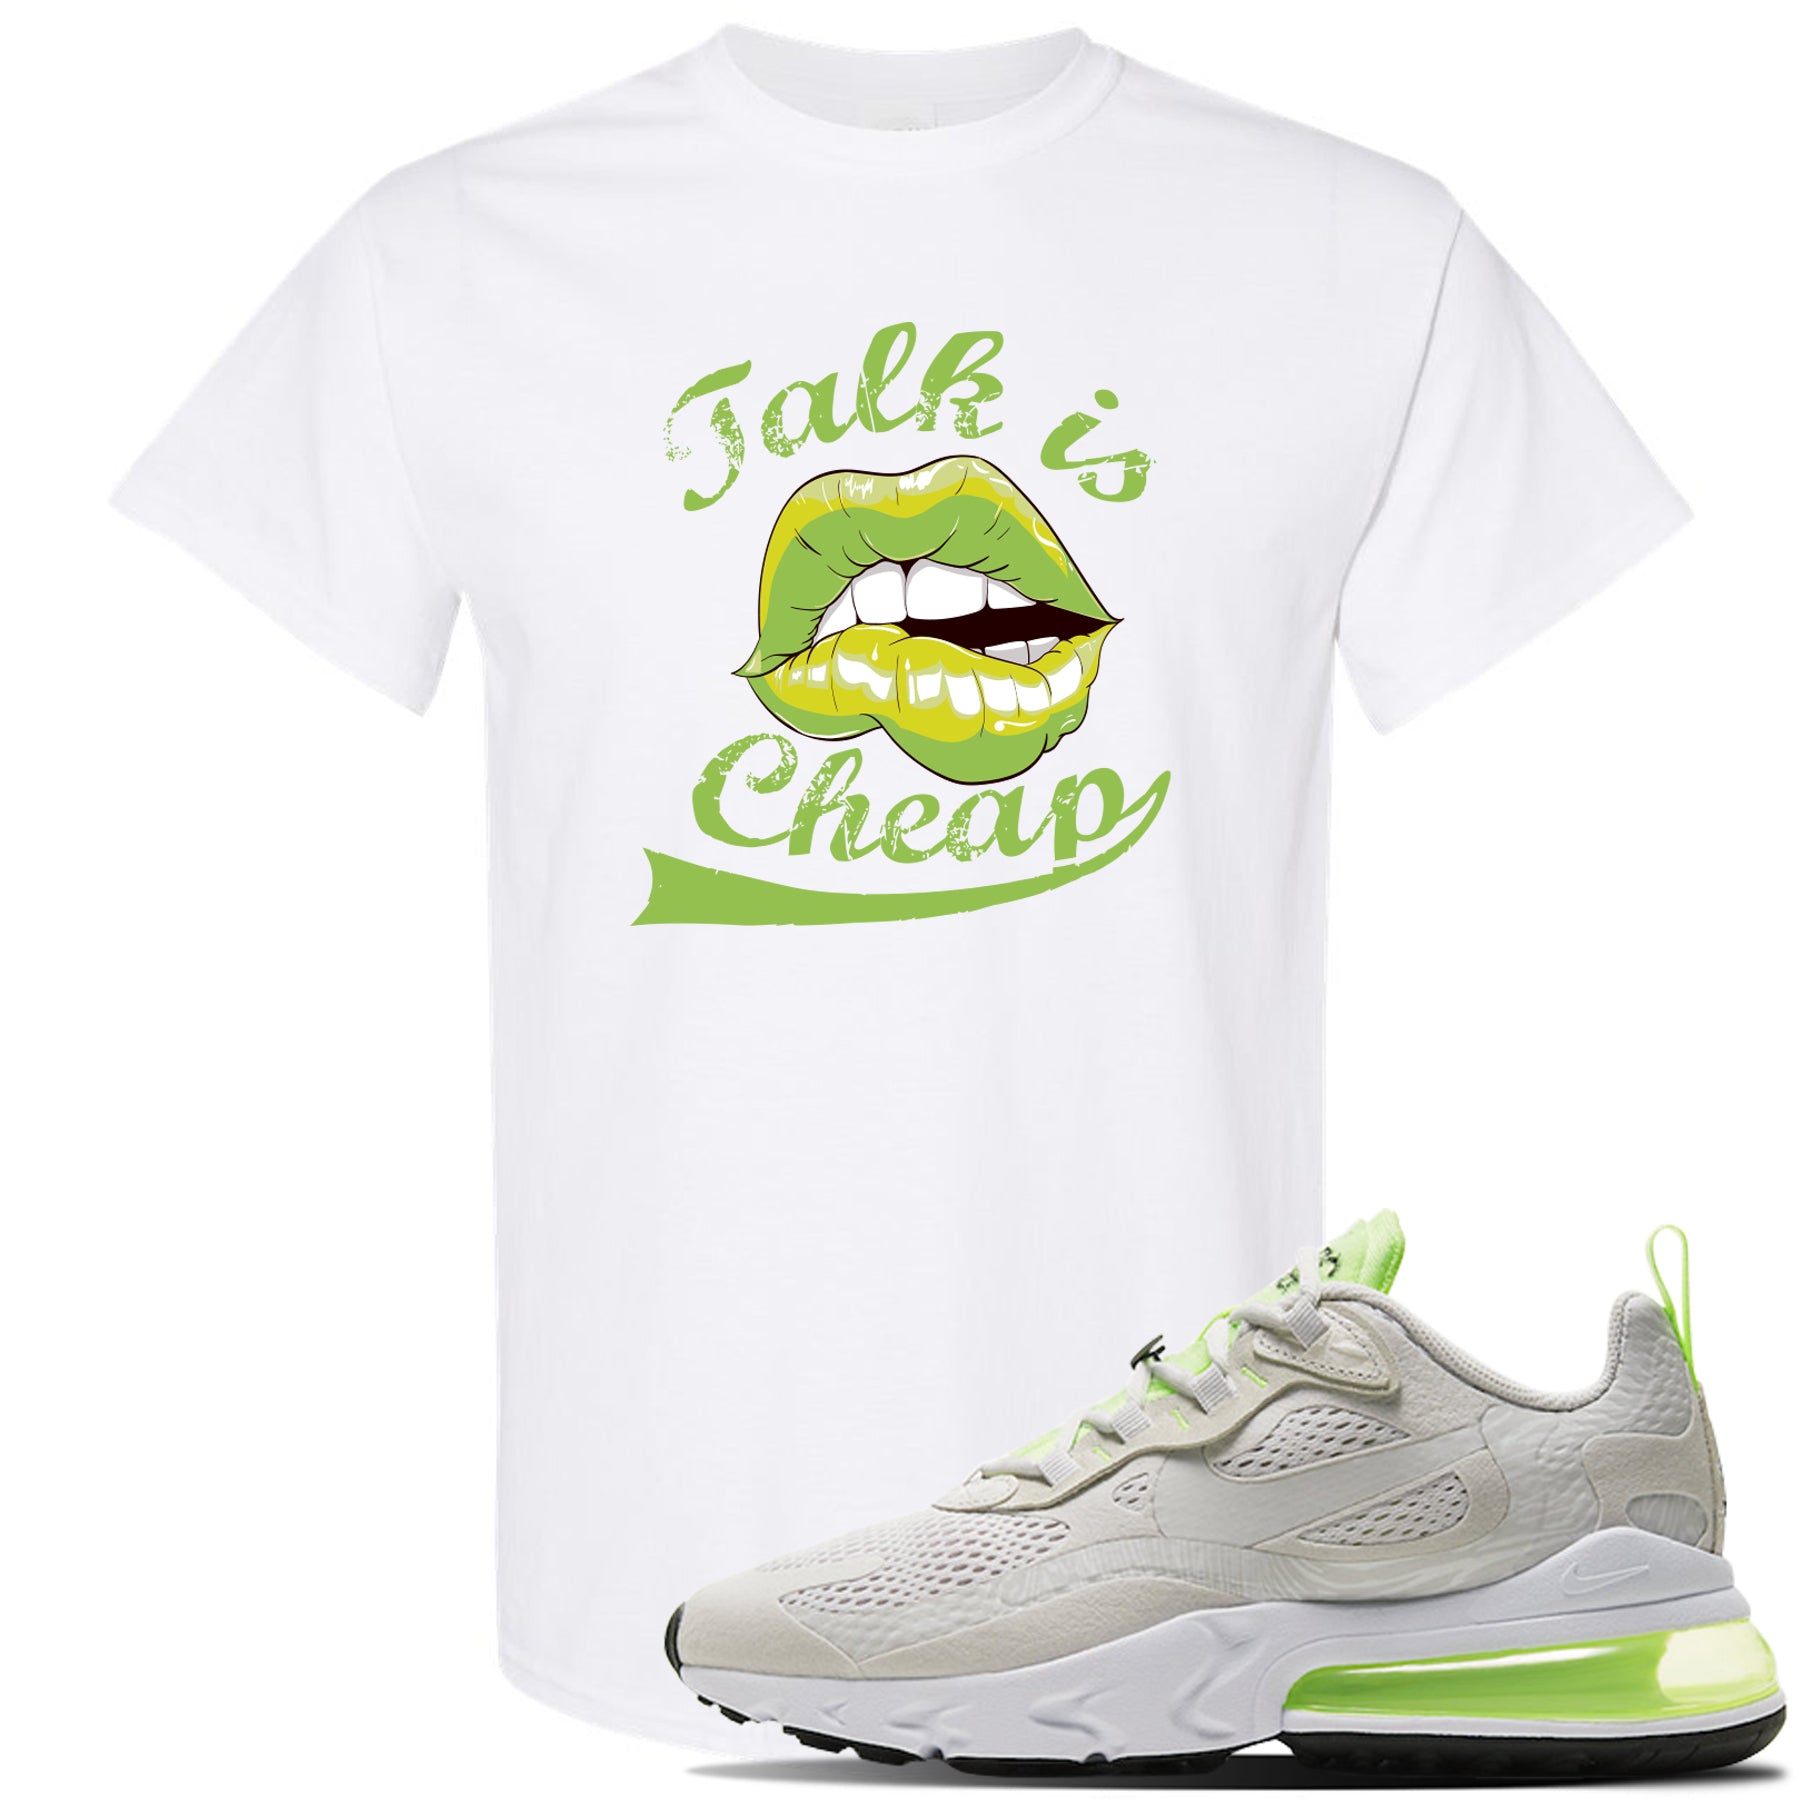 green and white nike t shirt